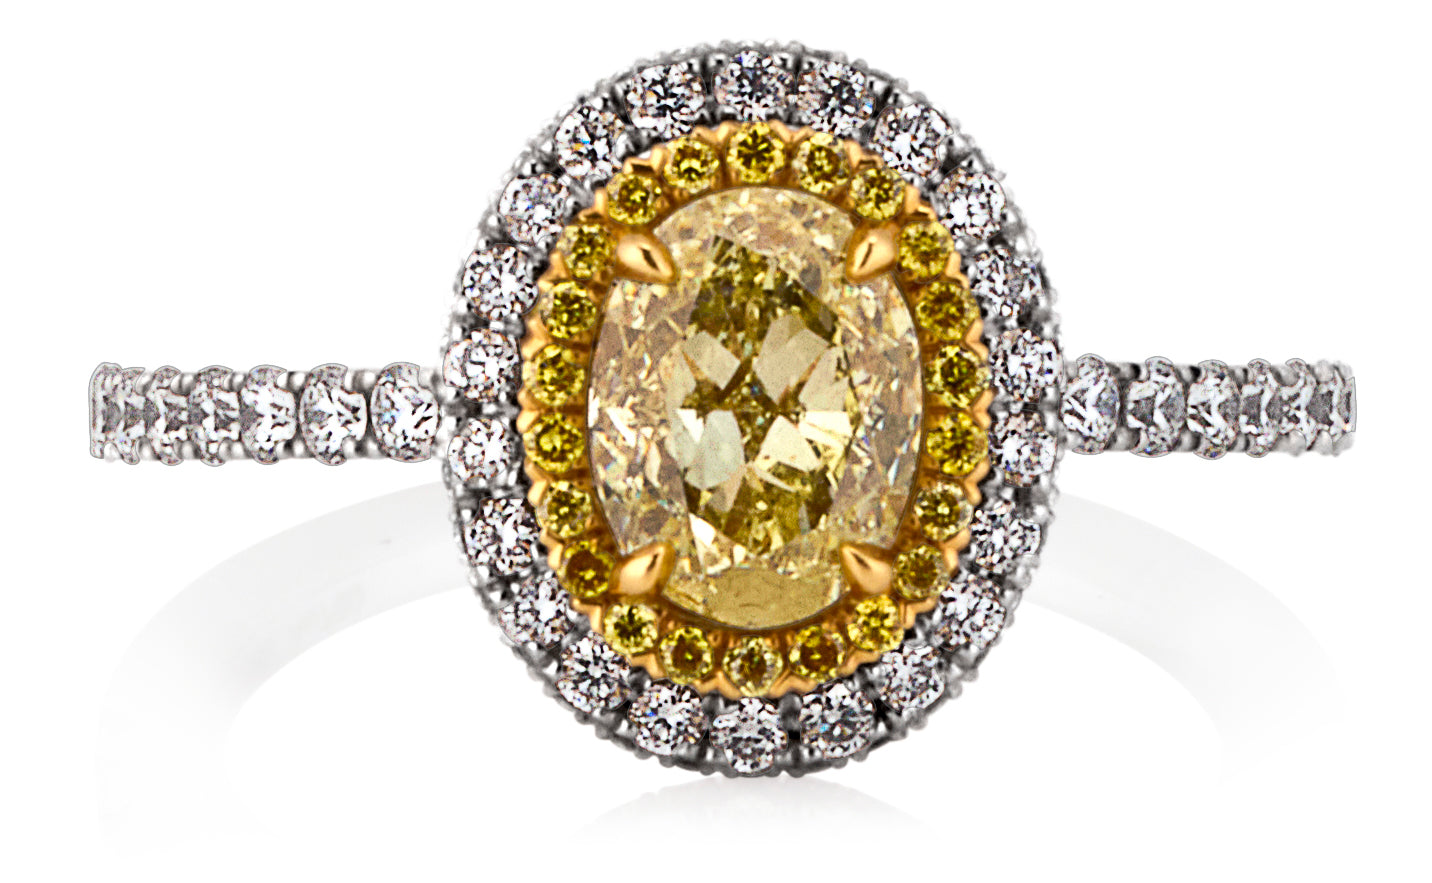 Oval yellow diamond ring